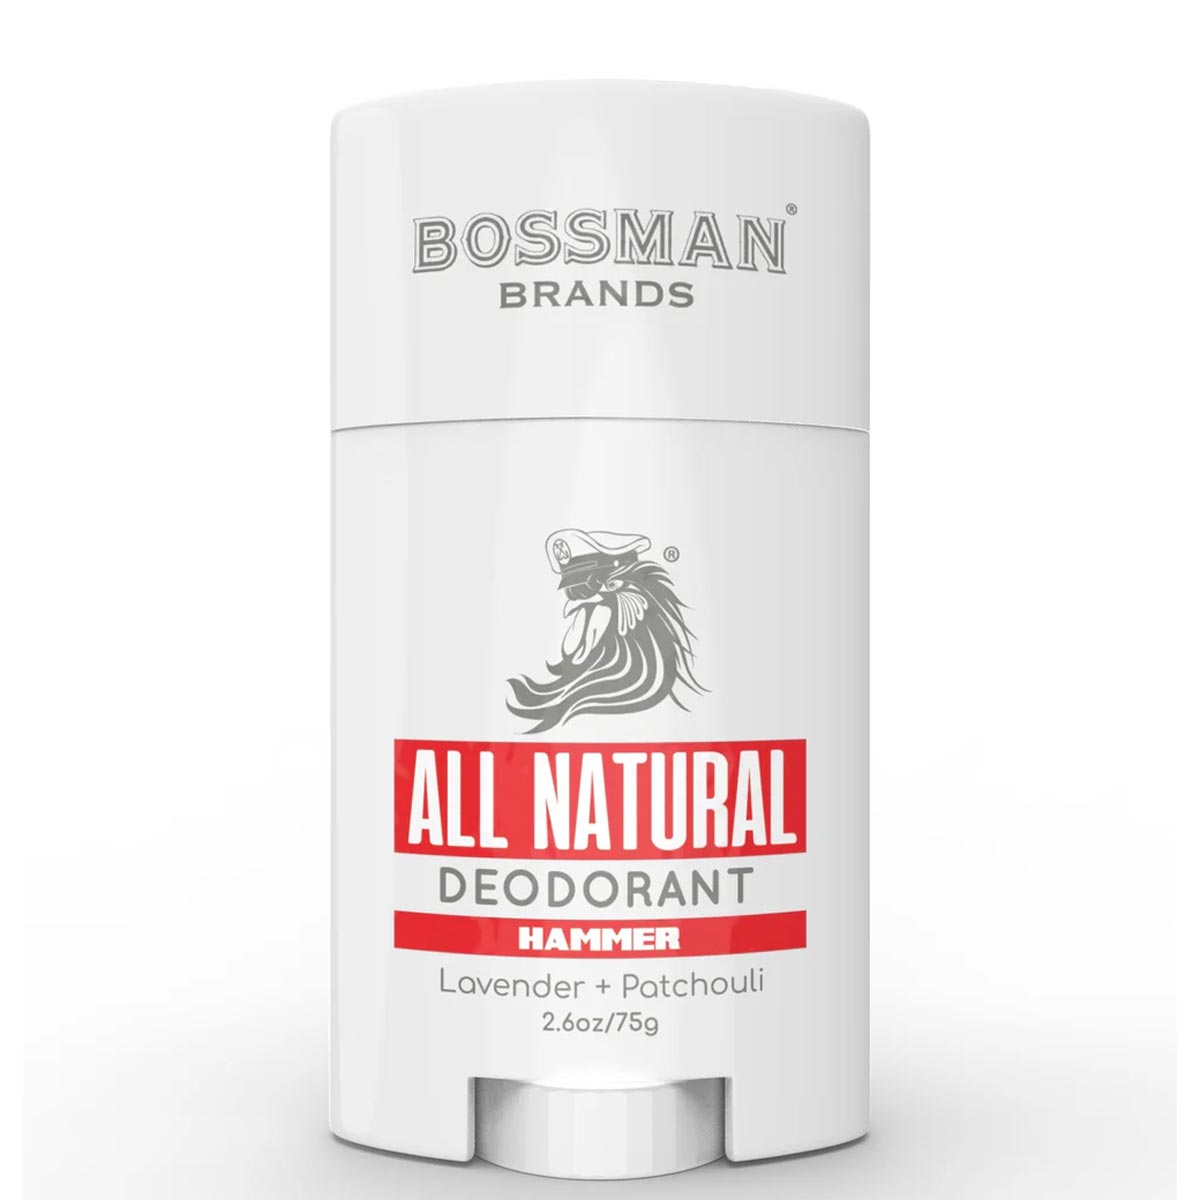 Bossman All Natural Deodorant for Men 75g | Hammer | Stick Deodorant